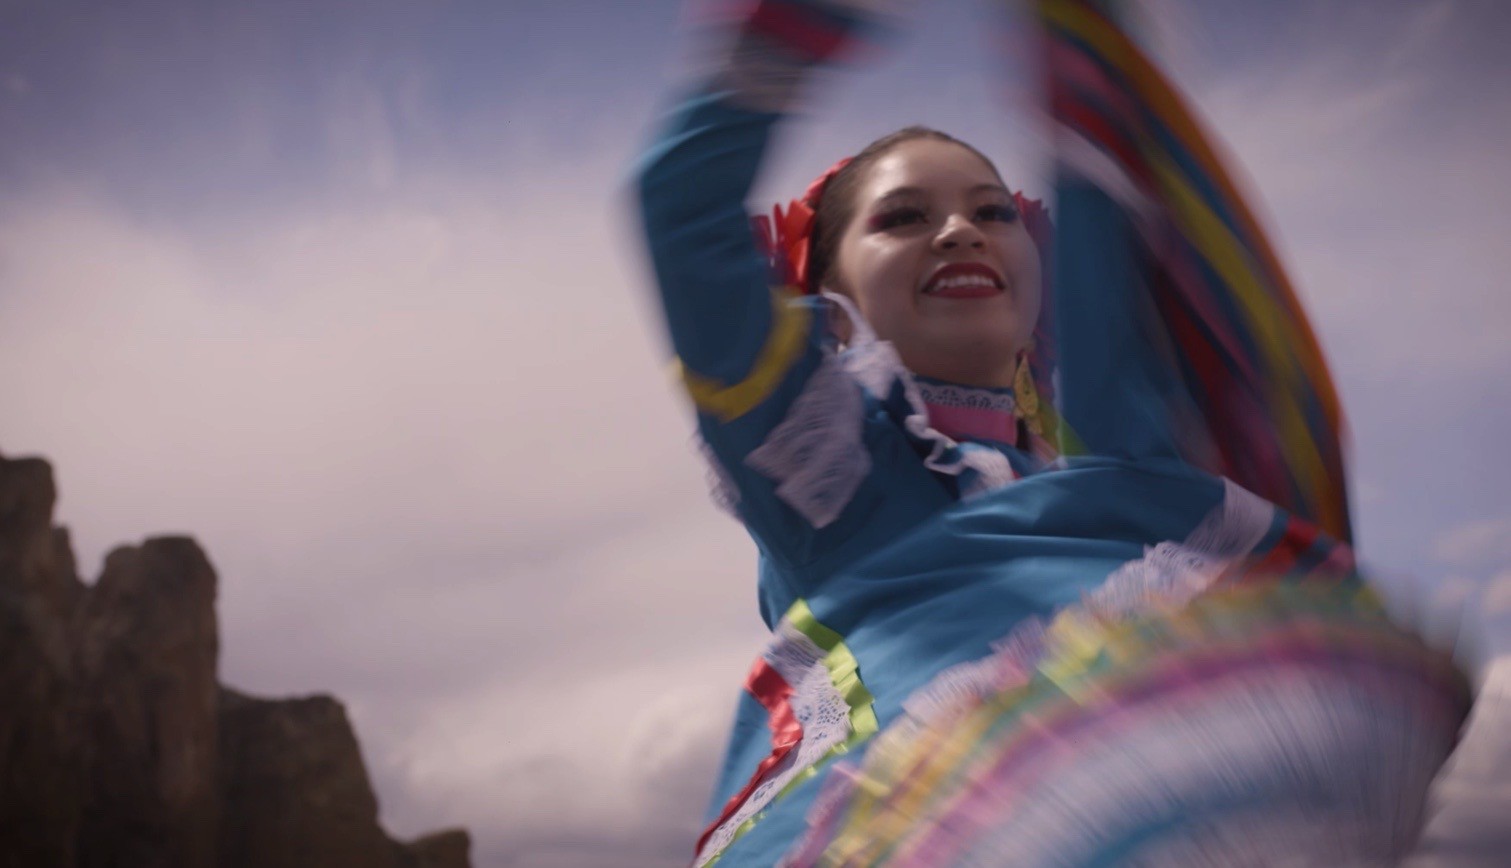 Latina dancer from music video shoot : human beings : Gary Nolton - Photographer / Cinematographer 